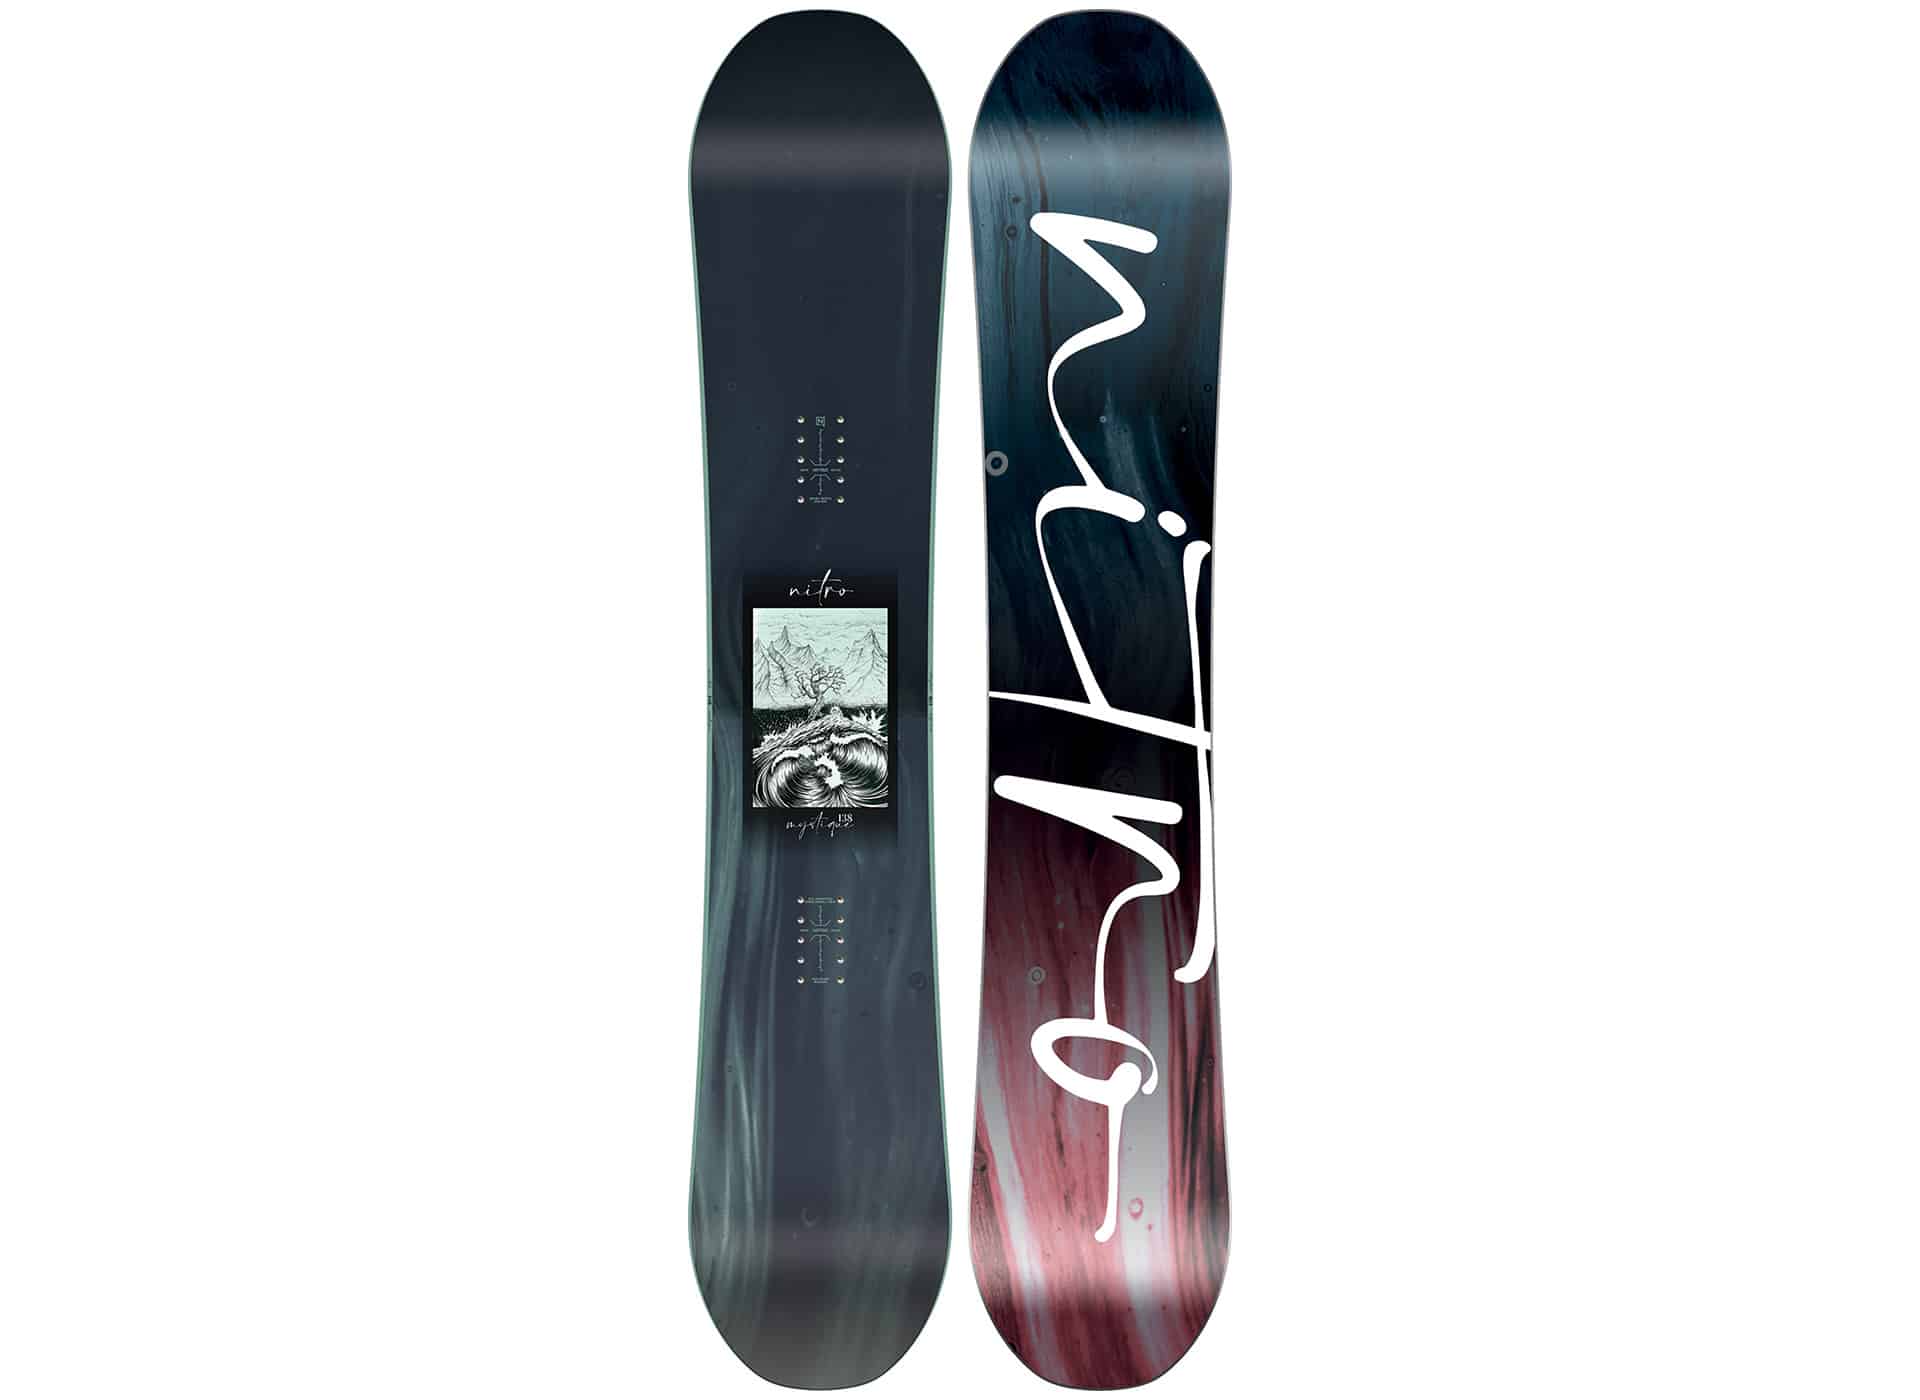 my lock screen  Snowboarding, Snowboarding pictures, Snowboard design